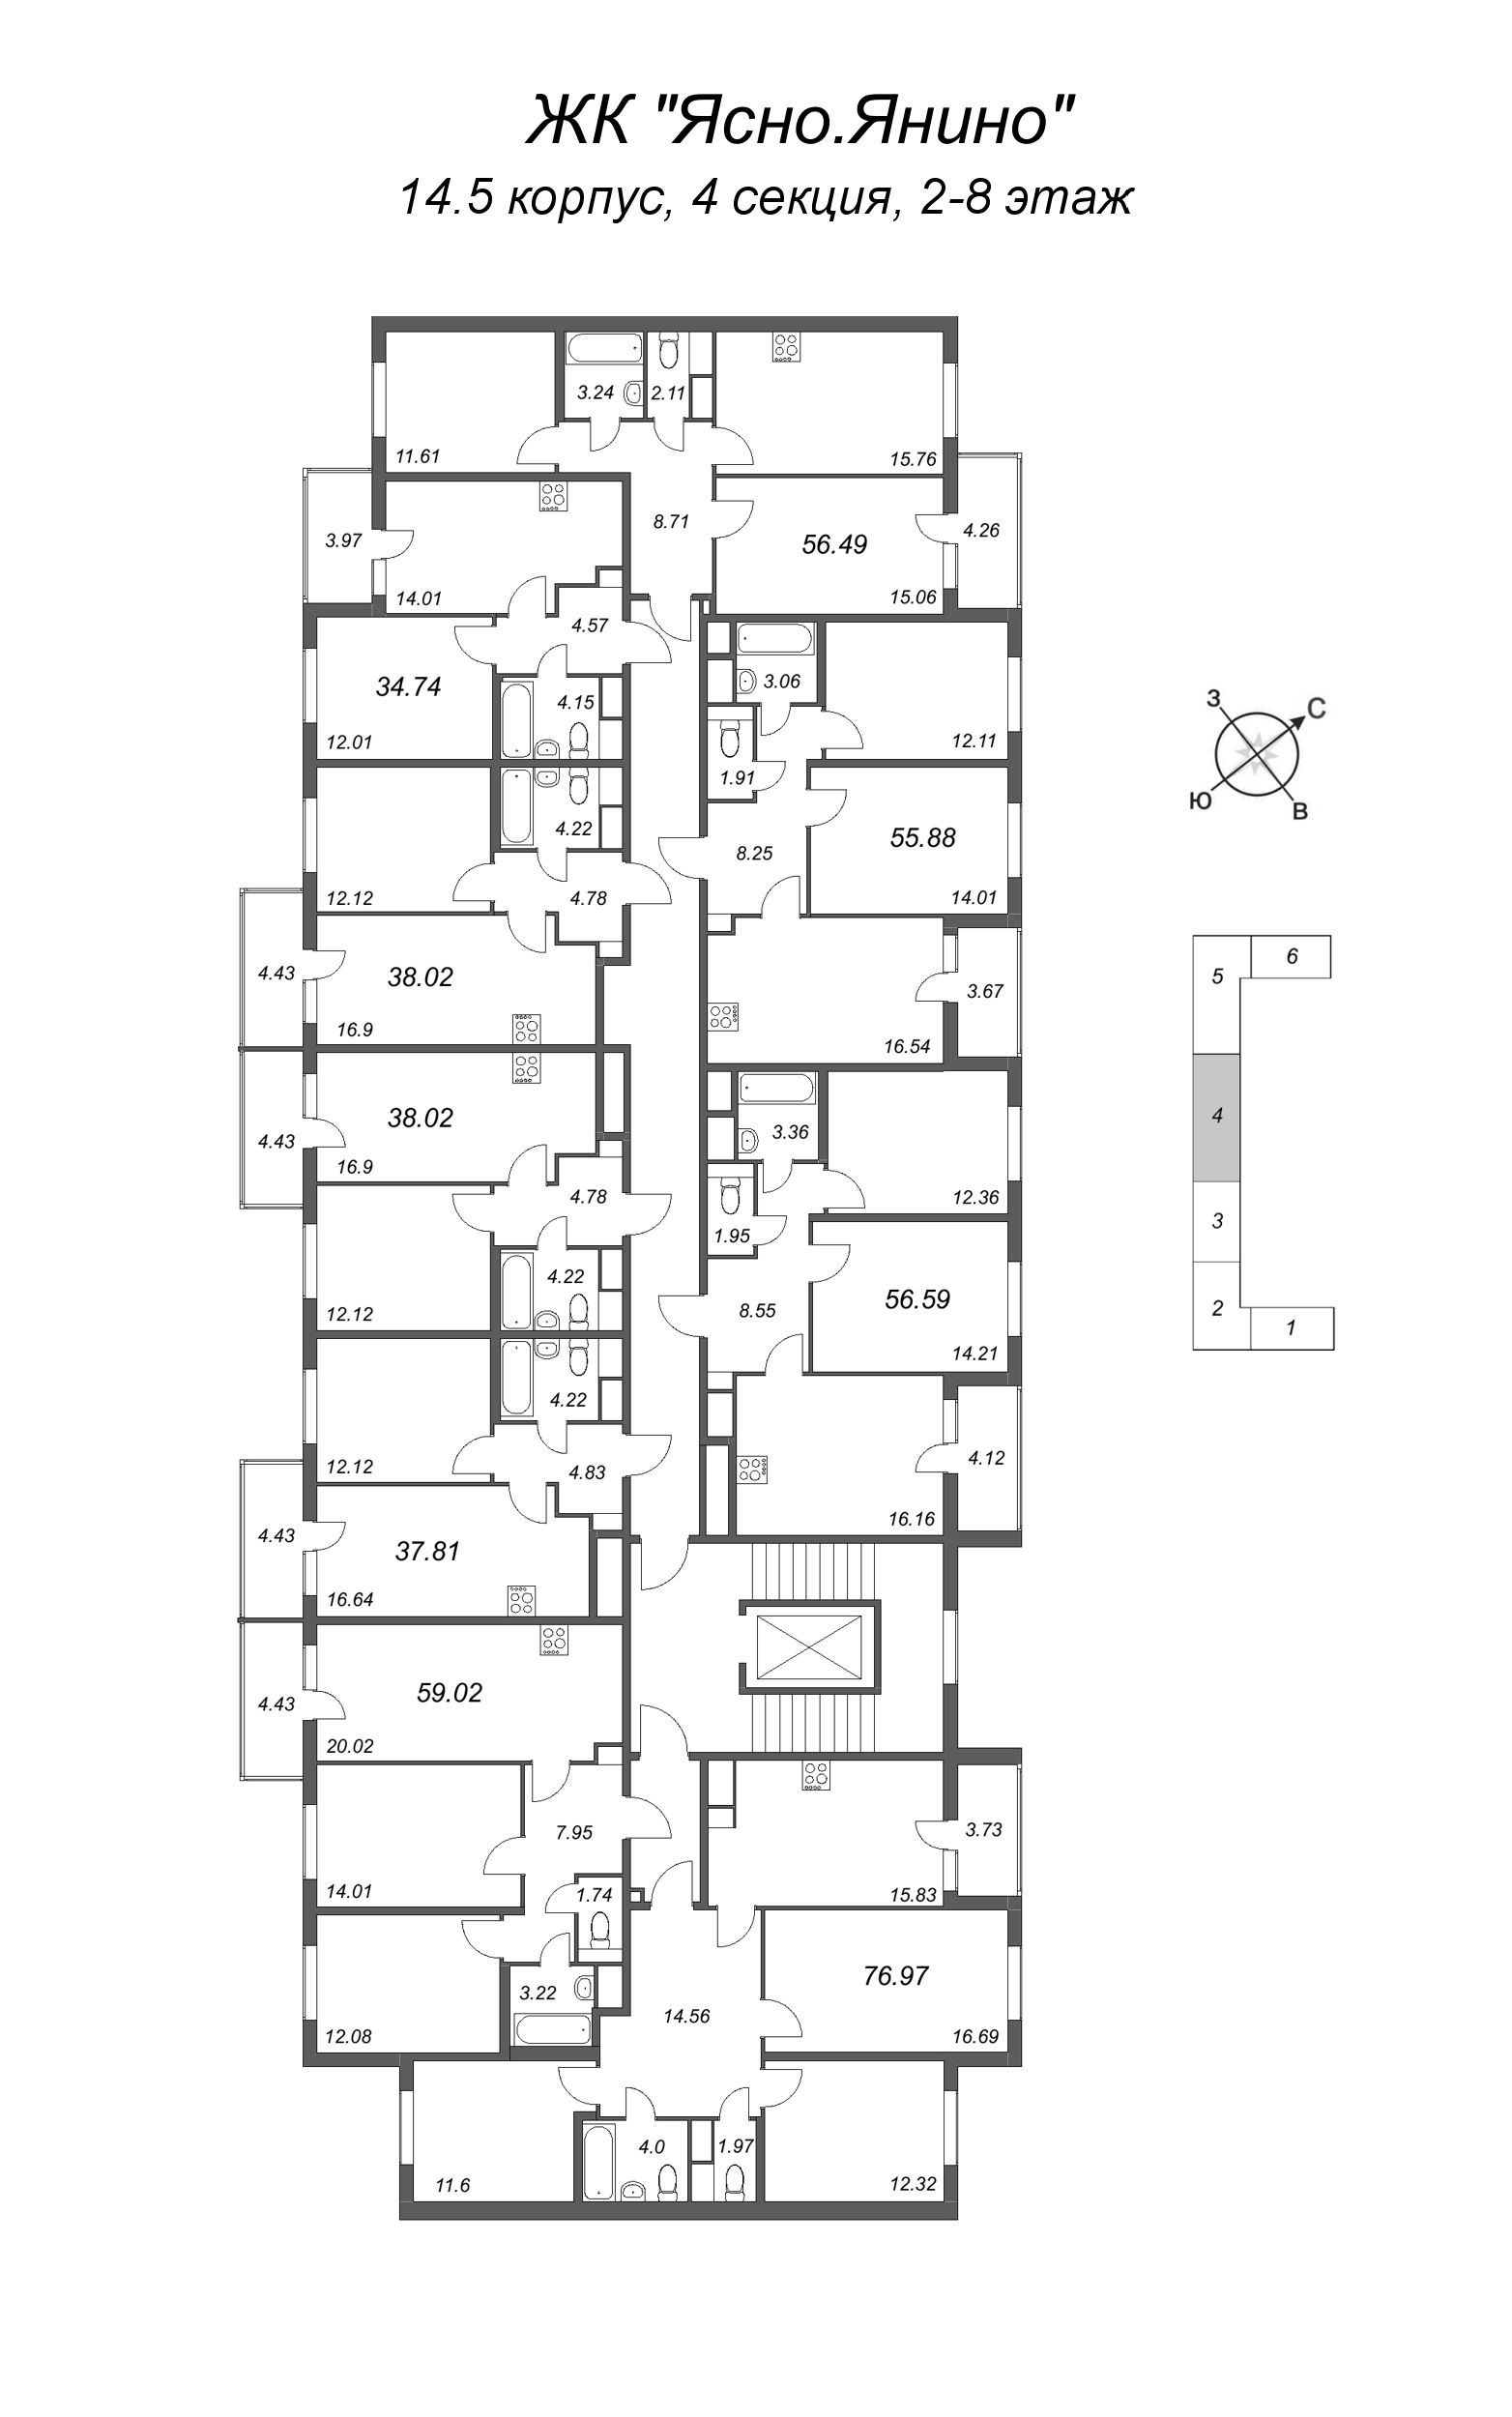 4-комнатная (Евро) квартира, 76.97 м² - планировка этажа